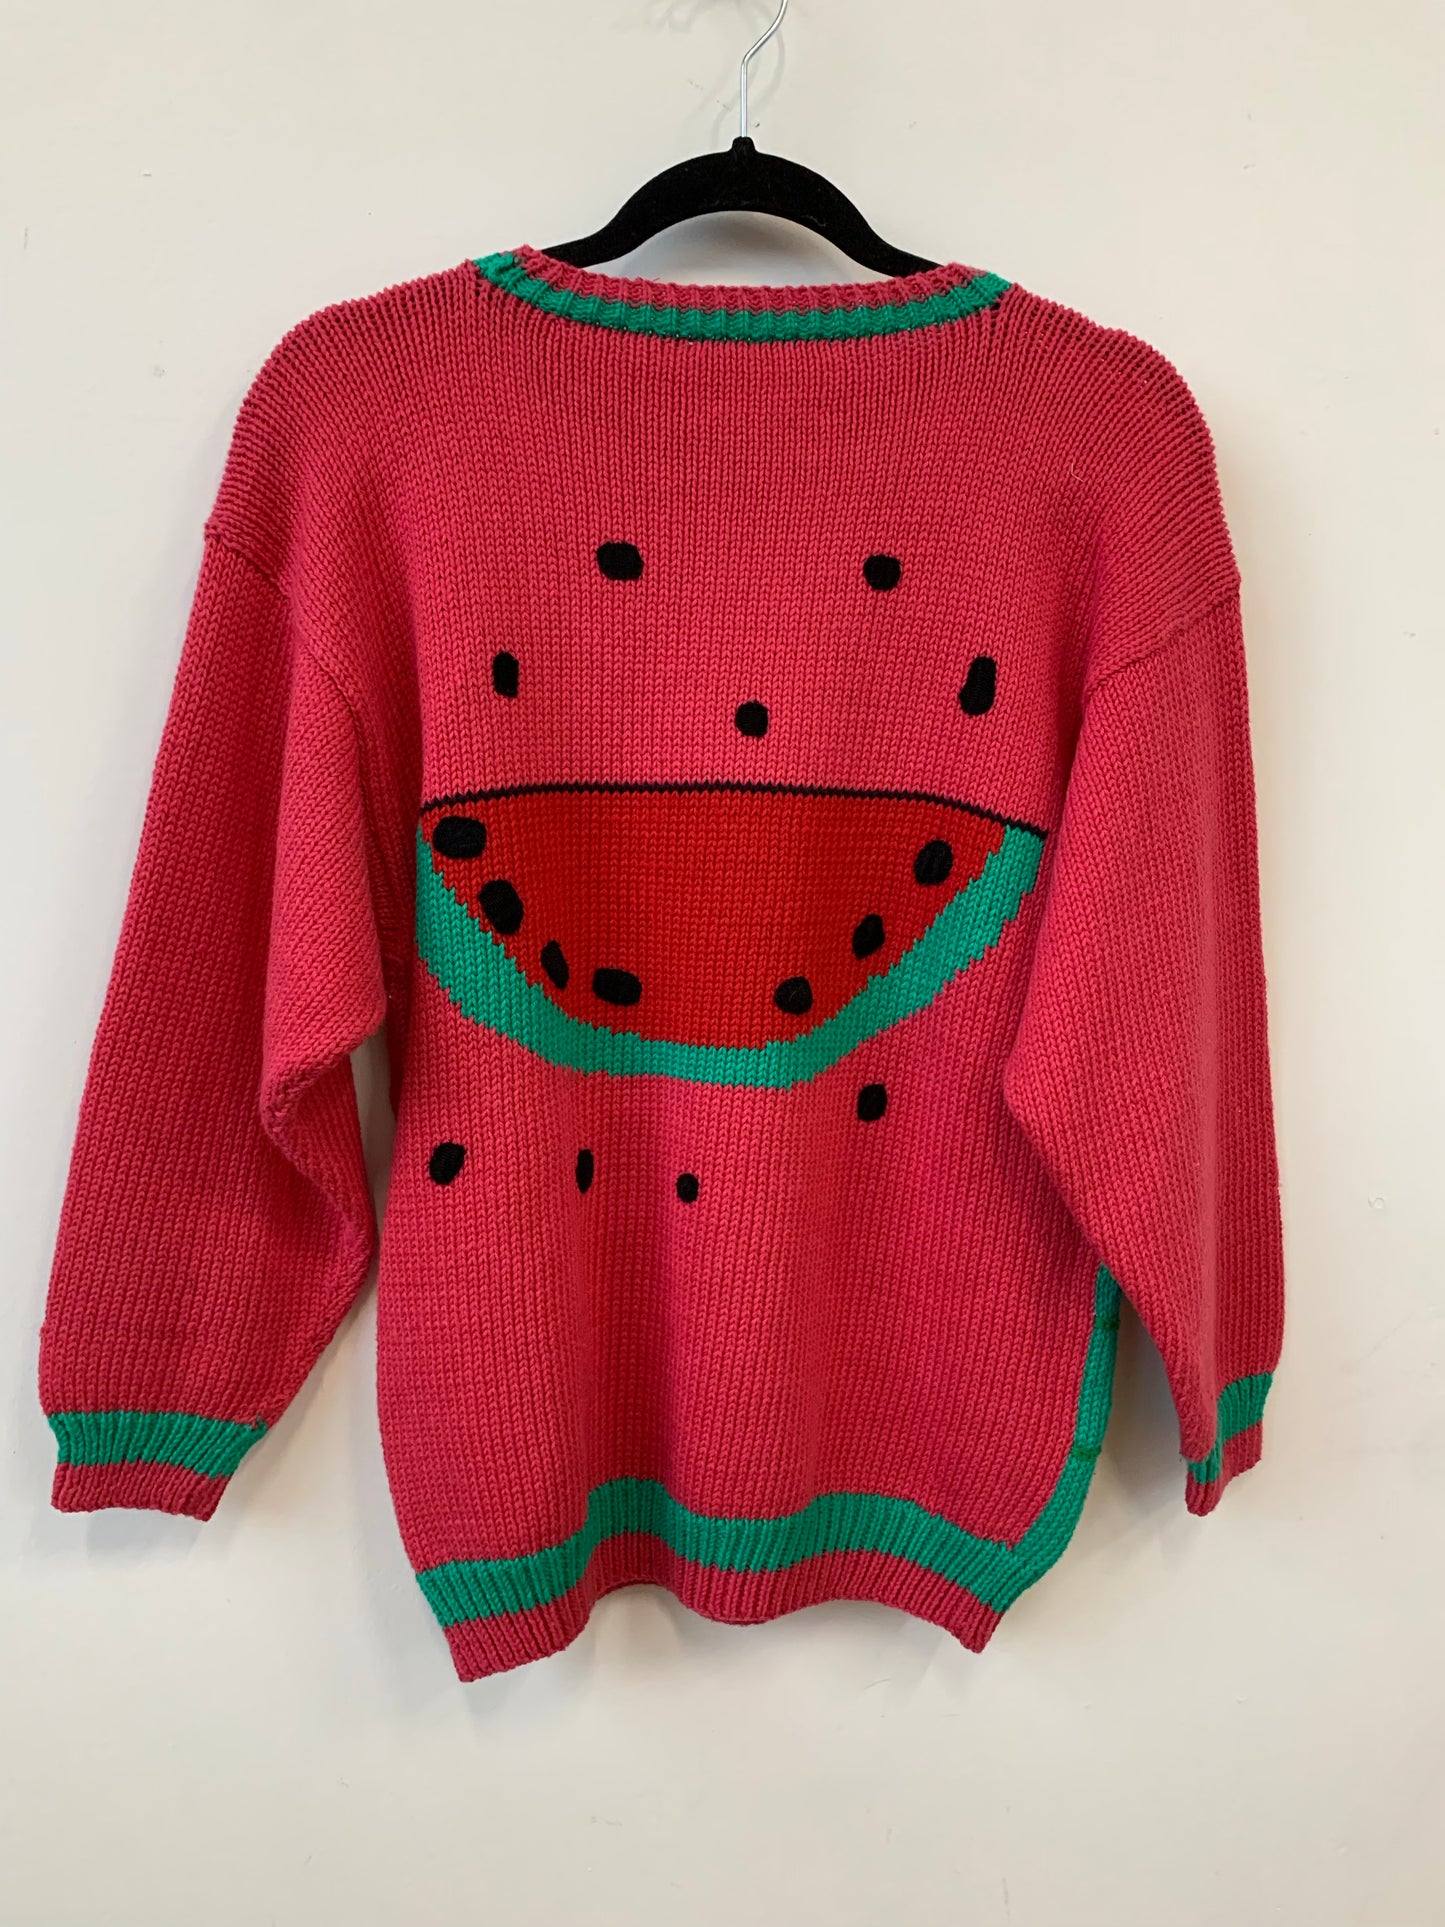 Watermelon Harvest knit